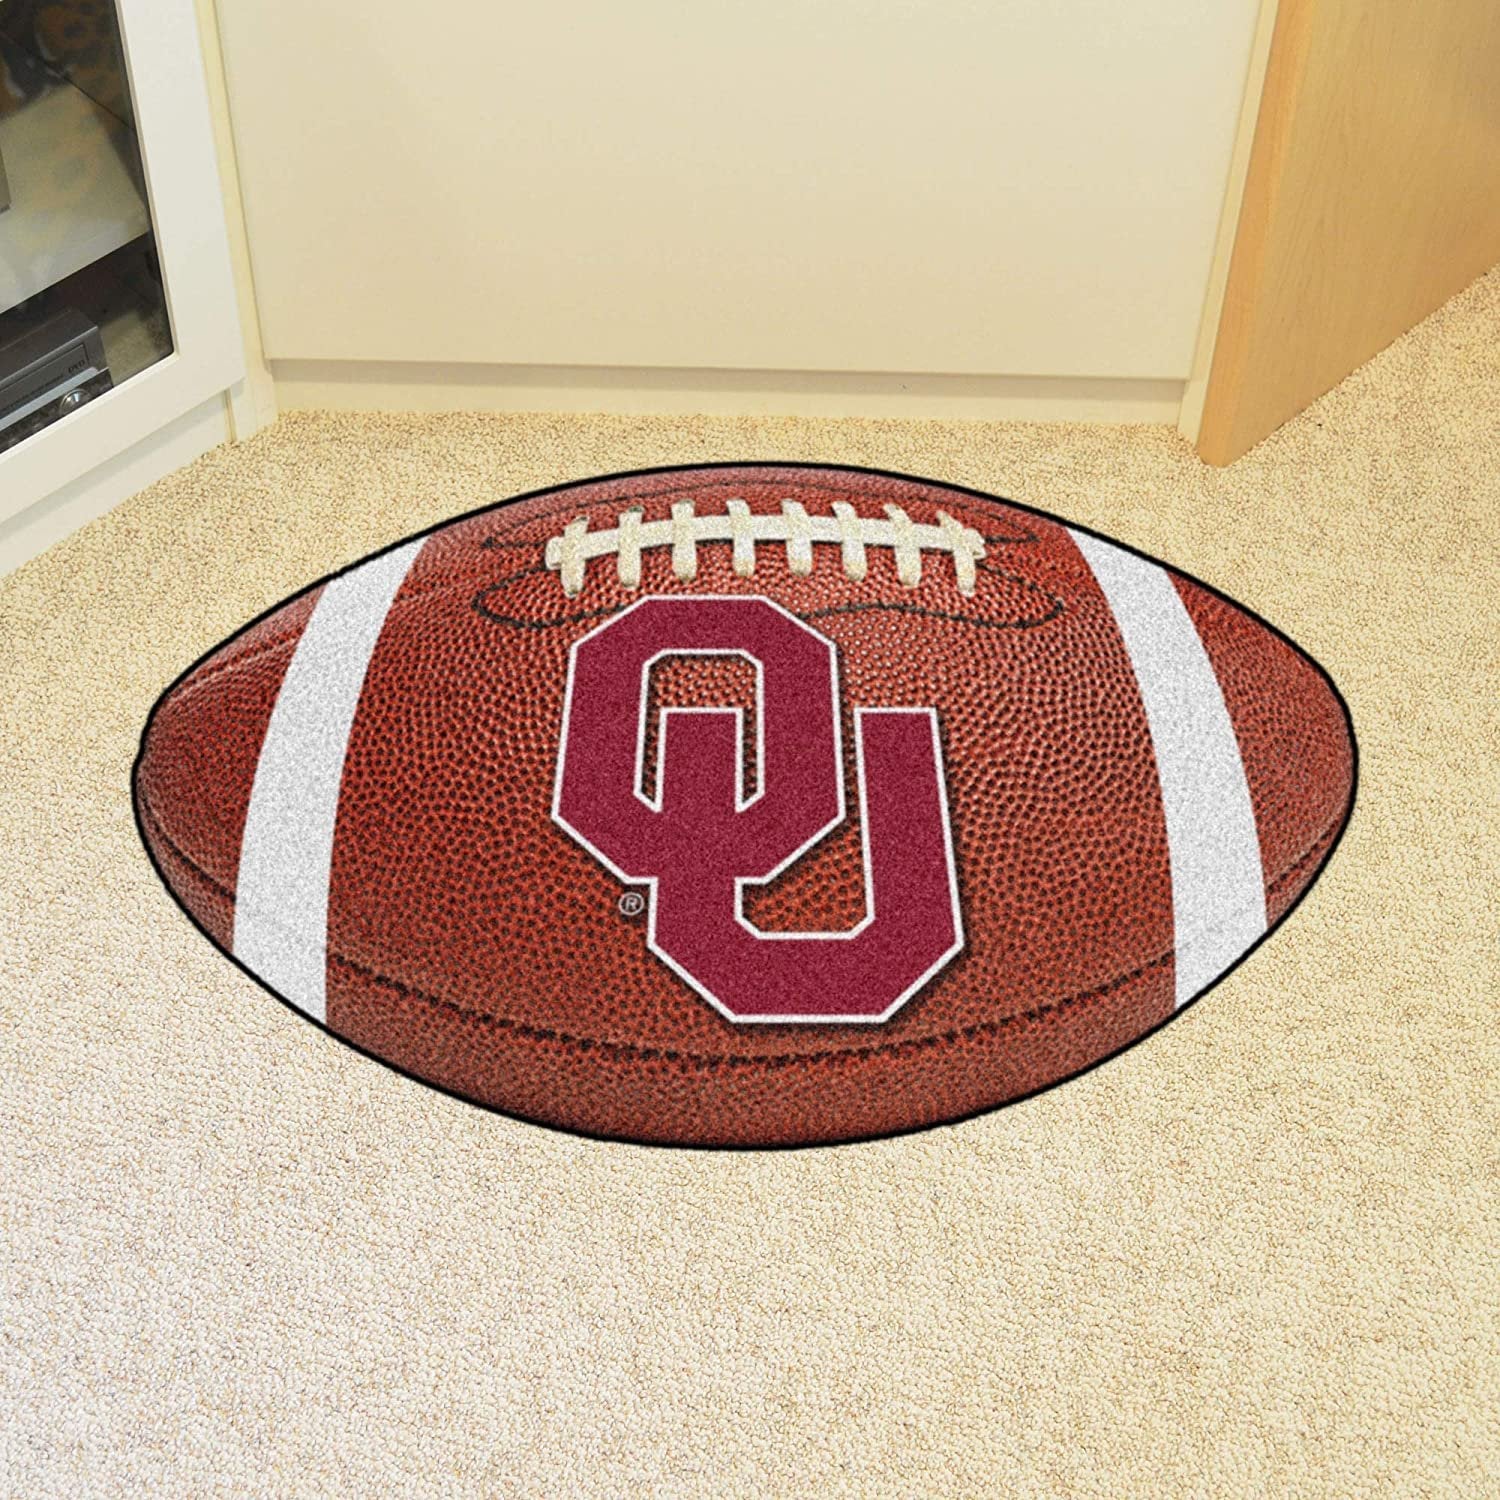 University of Oklahoma Sooners Floor Mat Area Rug, 20x32 Inch, Non-Skid Backing, Football Design